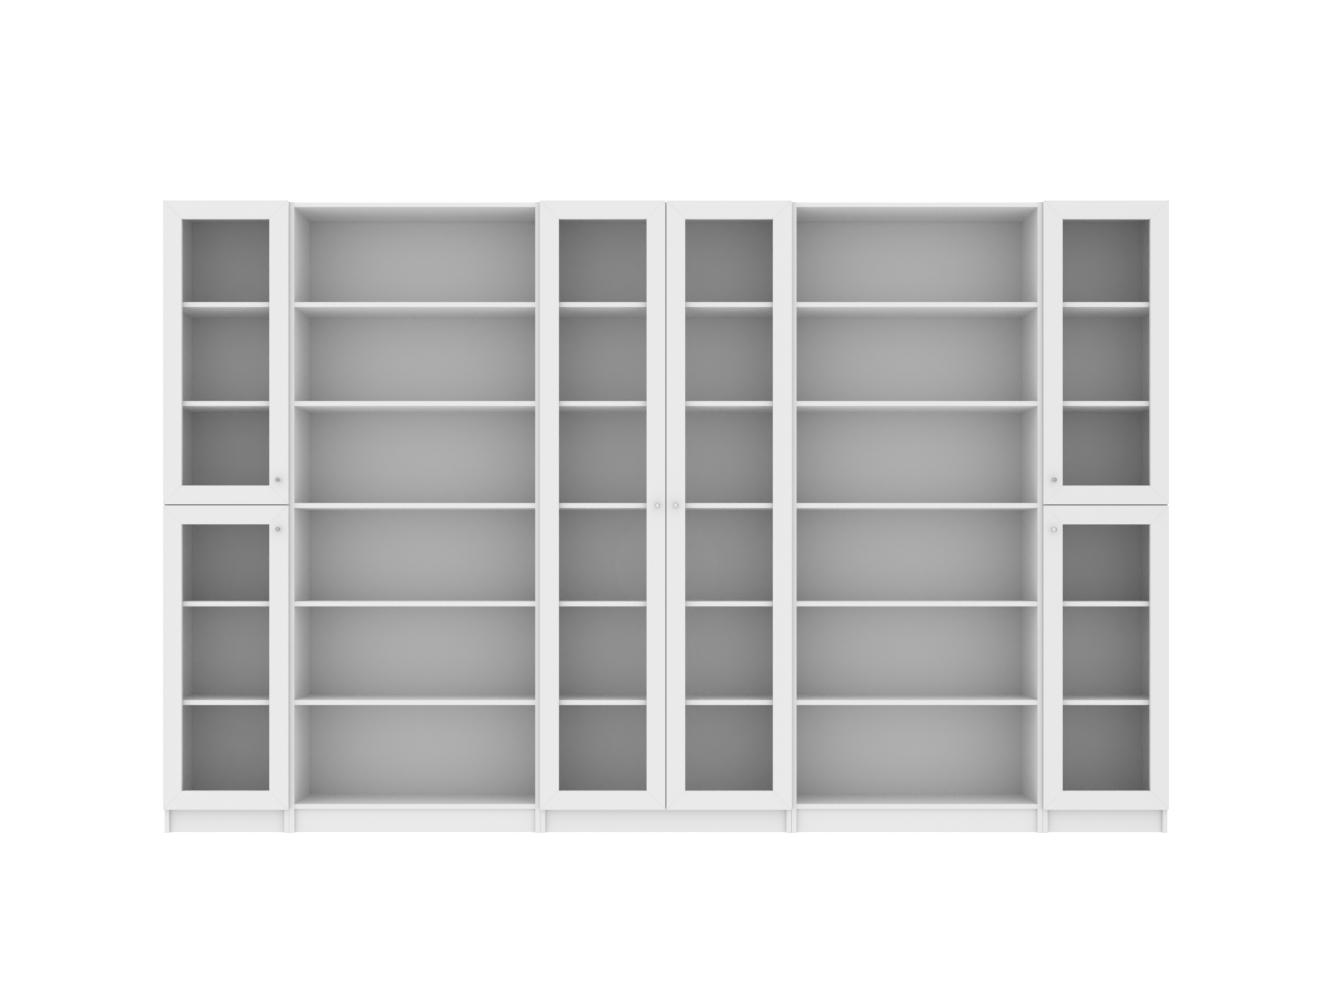  Книжный шкаф Билли 371 white ИКЕА (IKEA) изображение товара